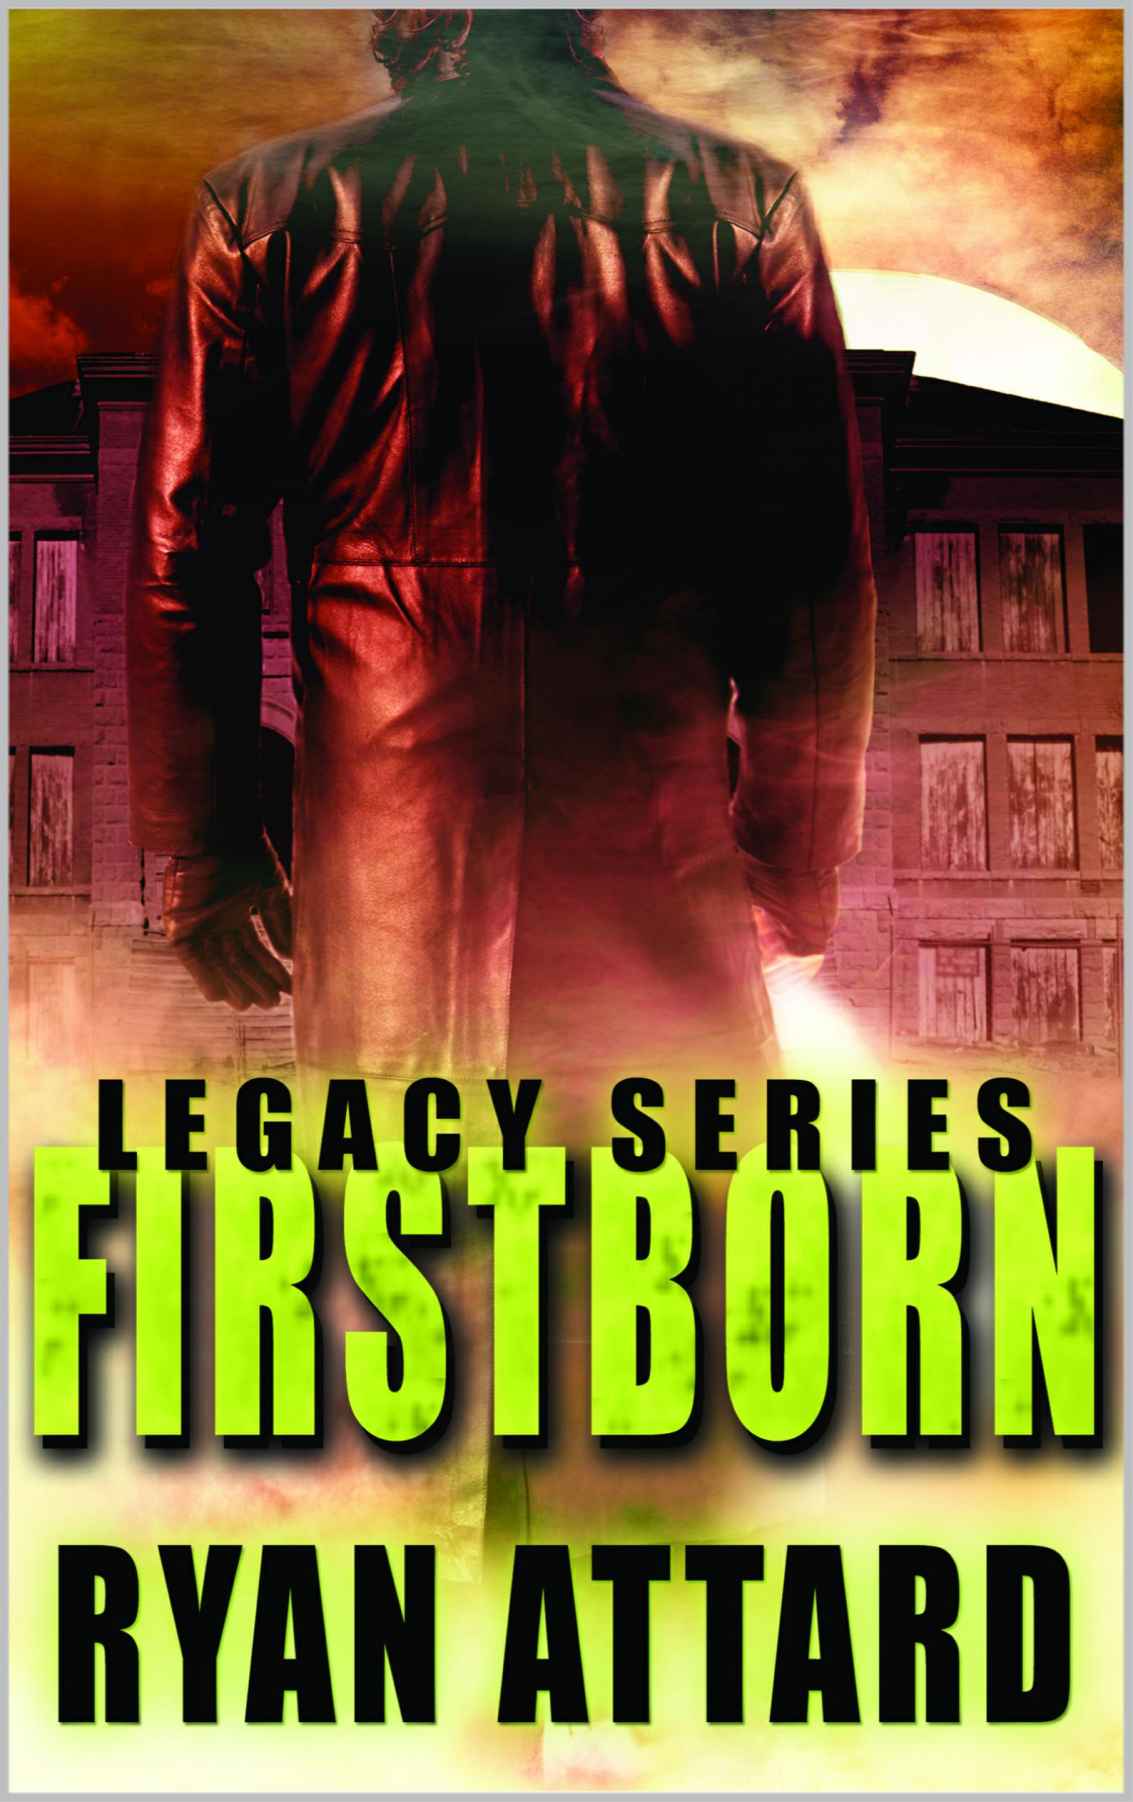 Firstborn: Legacy